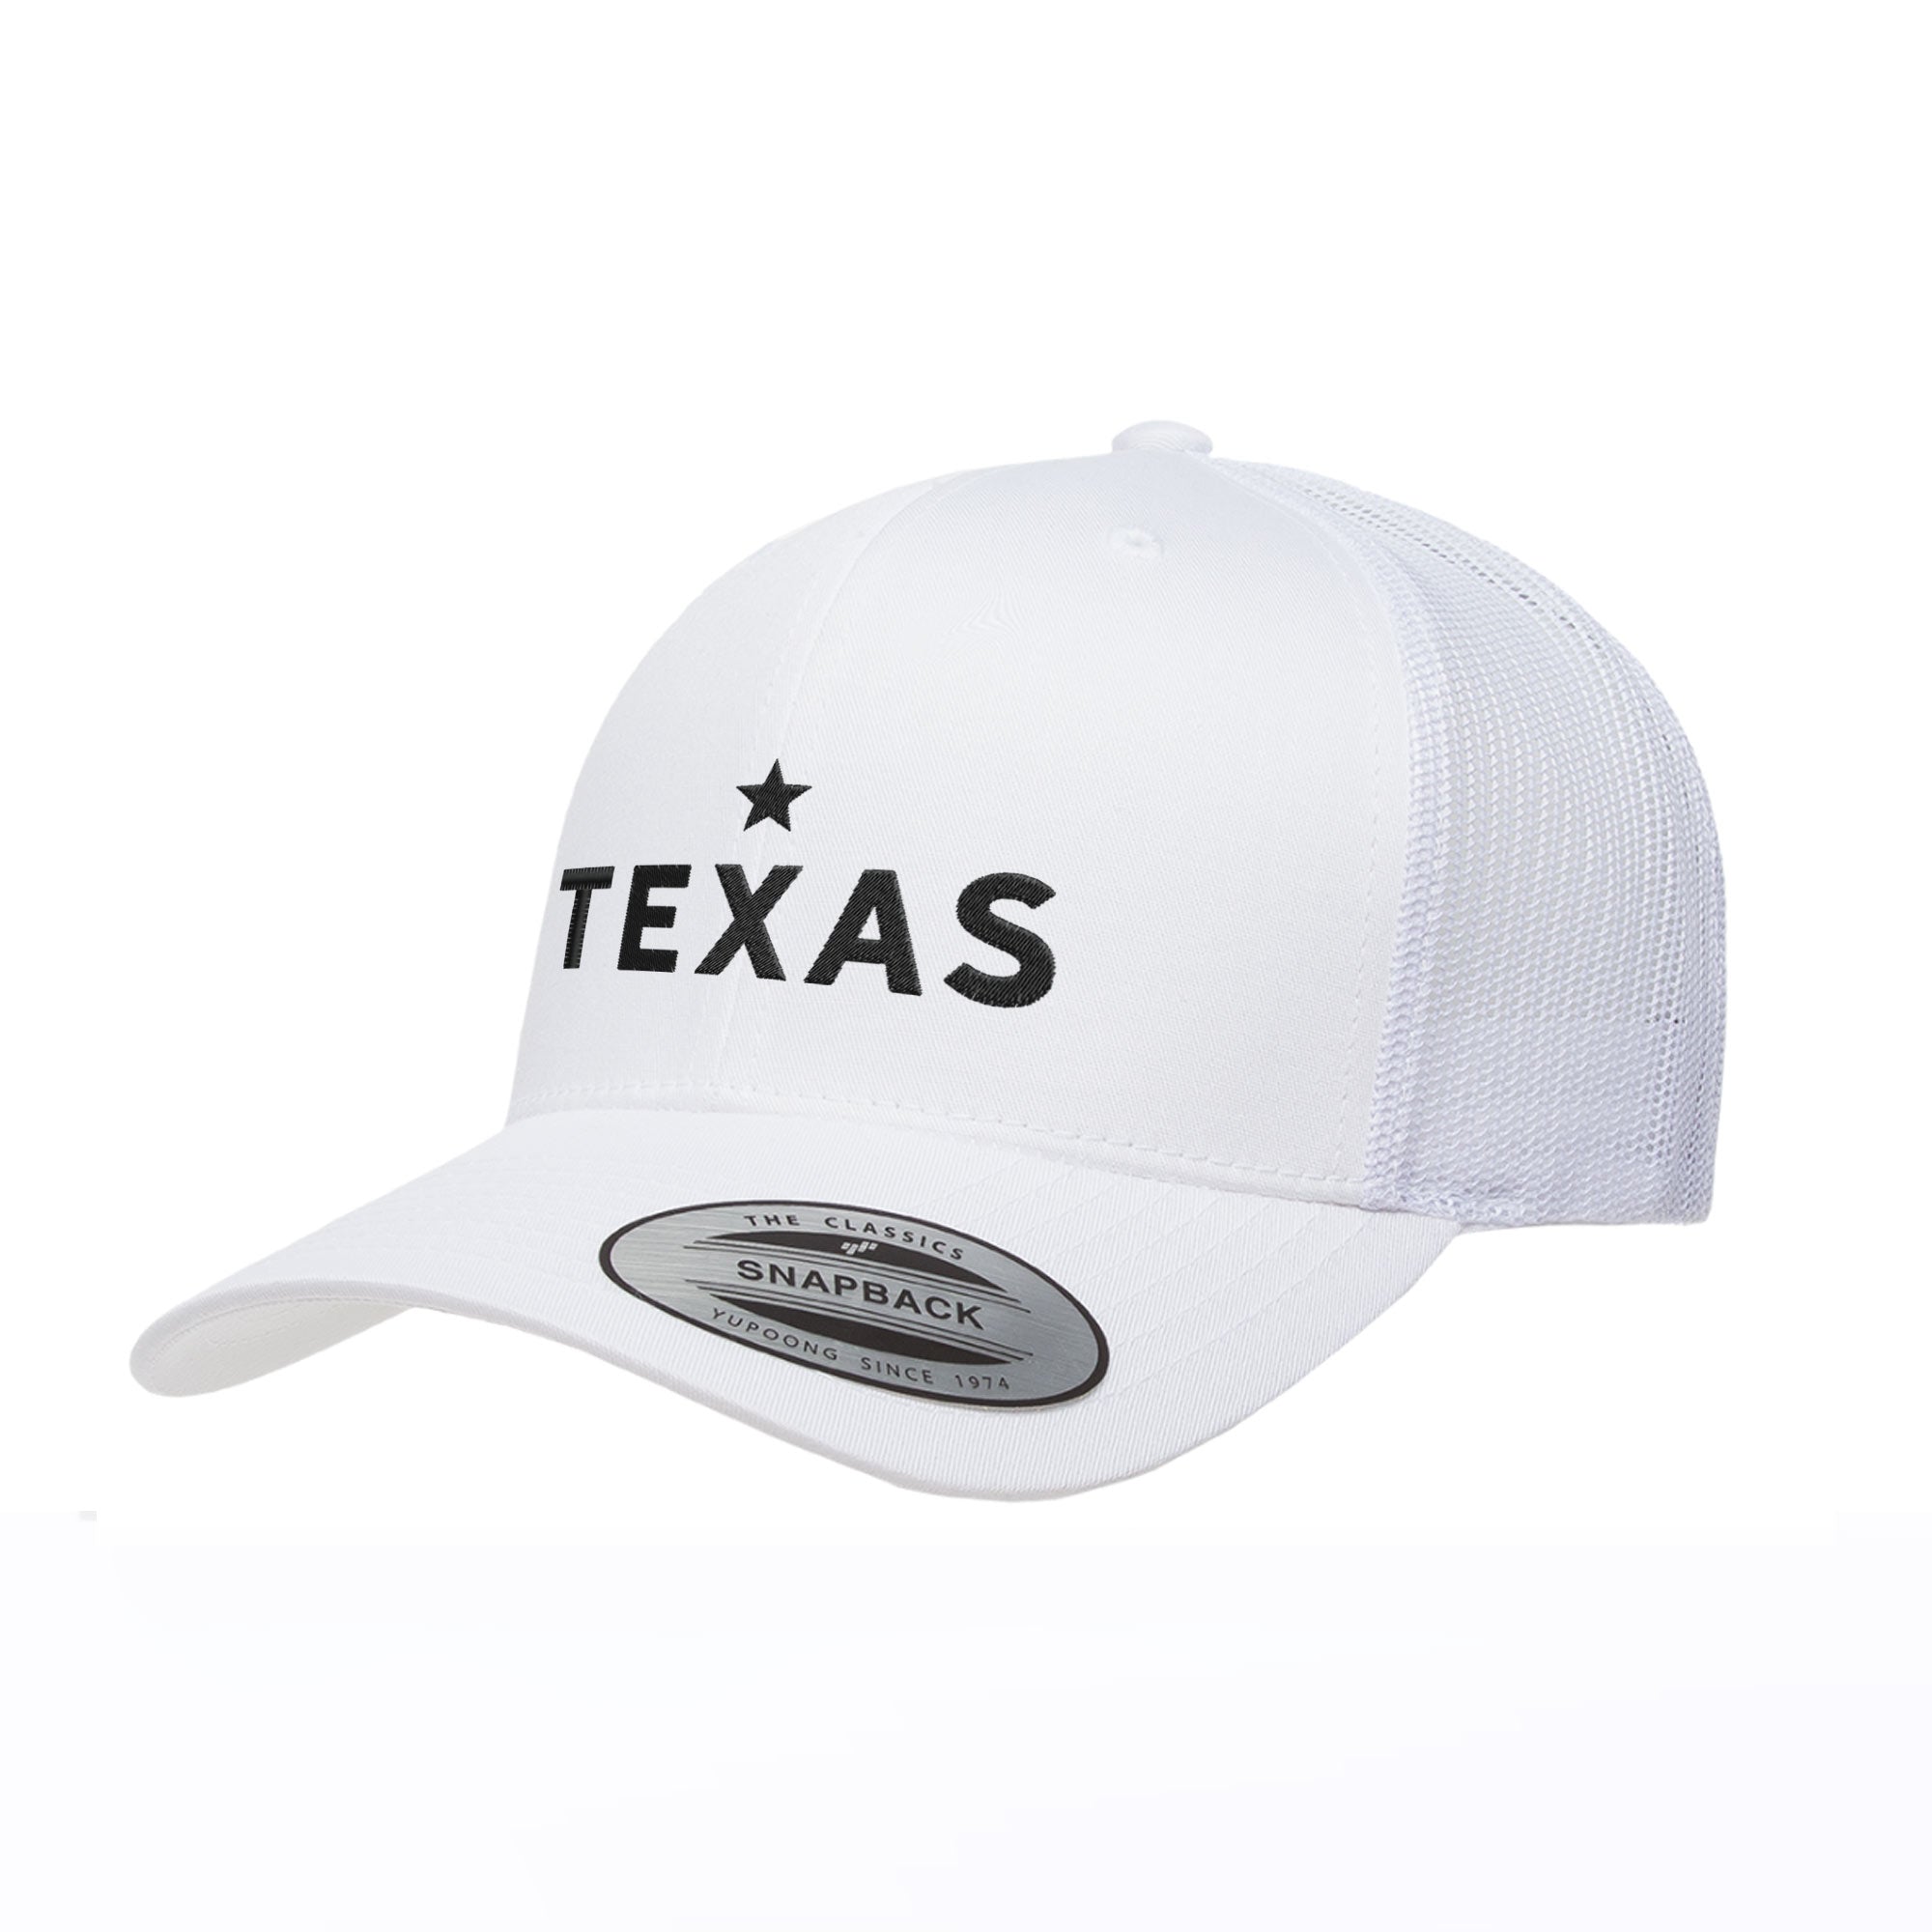 Texas Lone Star Vintage Trucker Cap